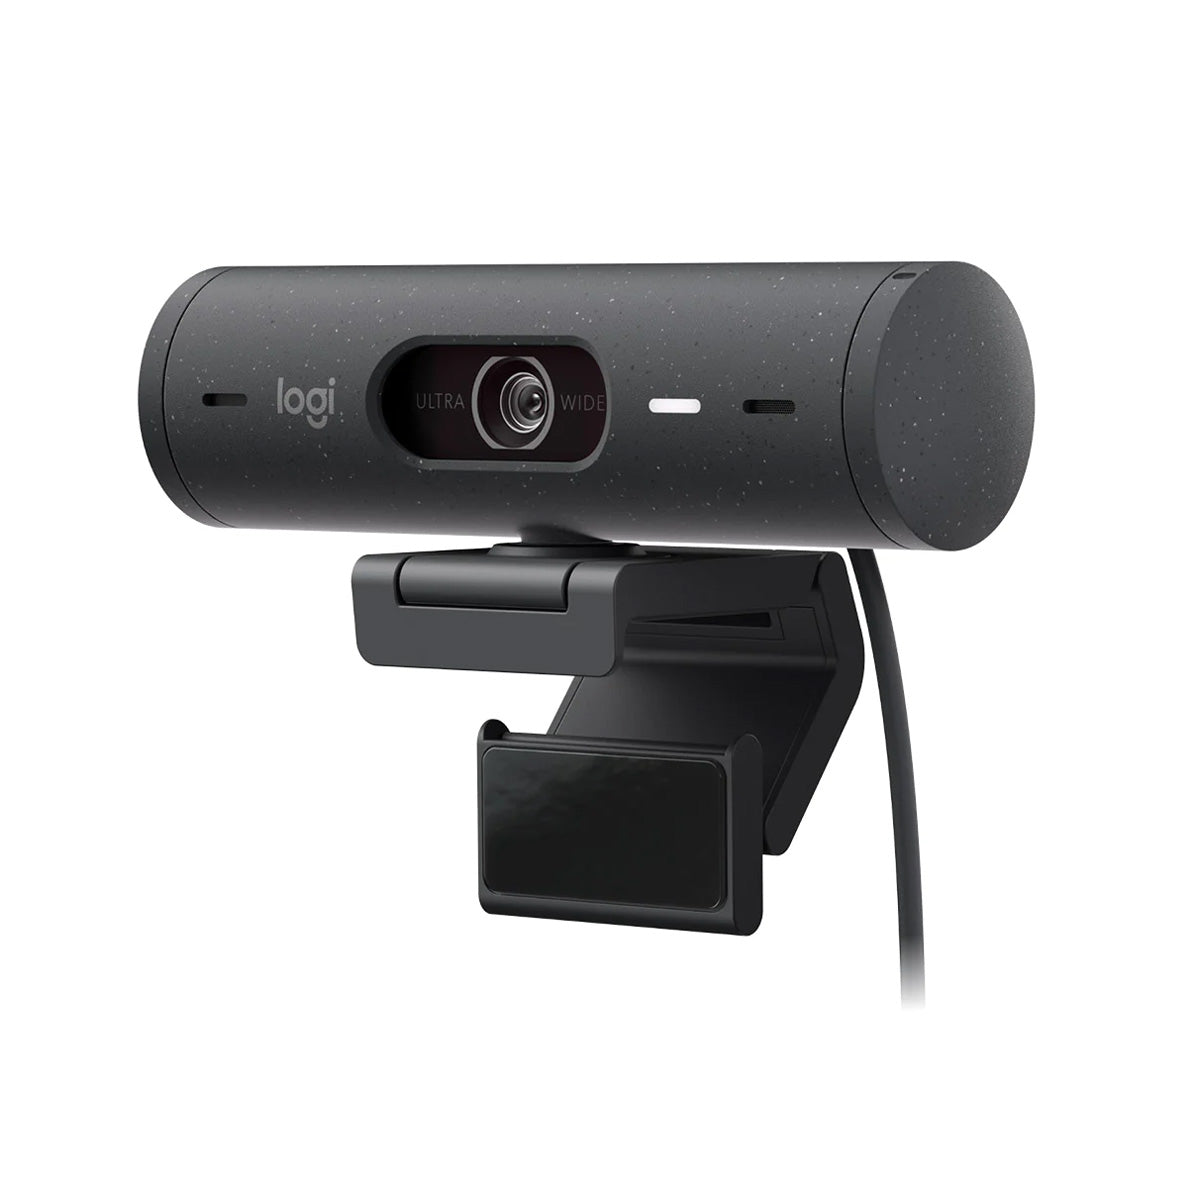 Logitech Brio 500 1080p HDR Webcam - Graphite